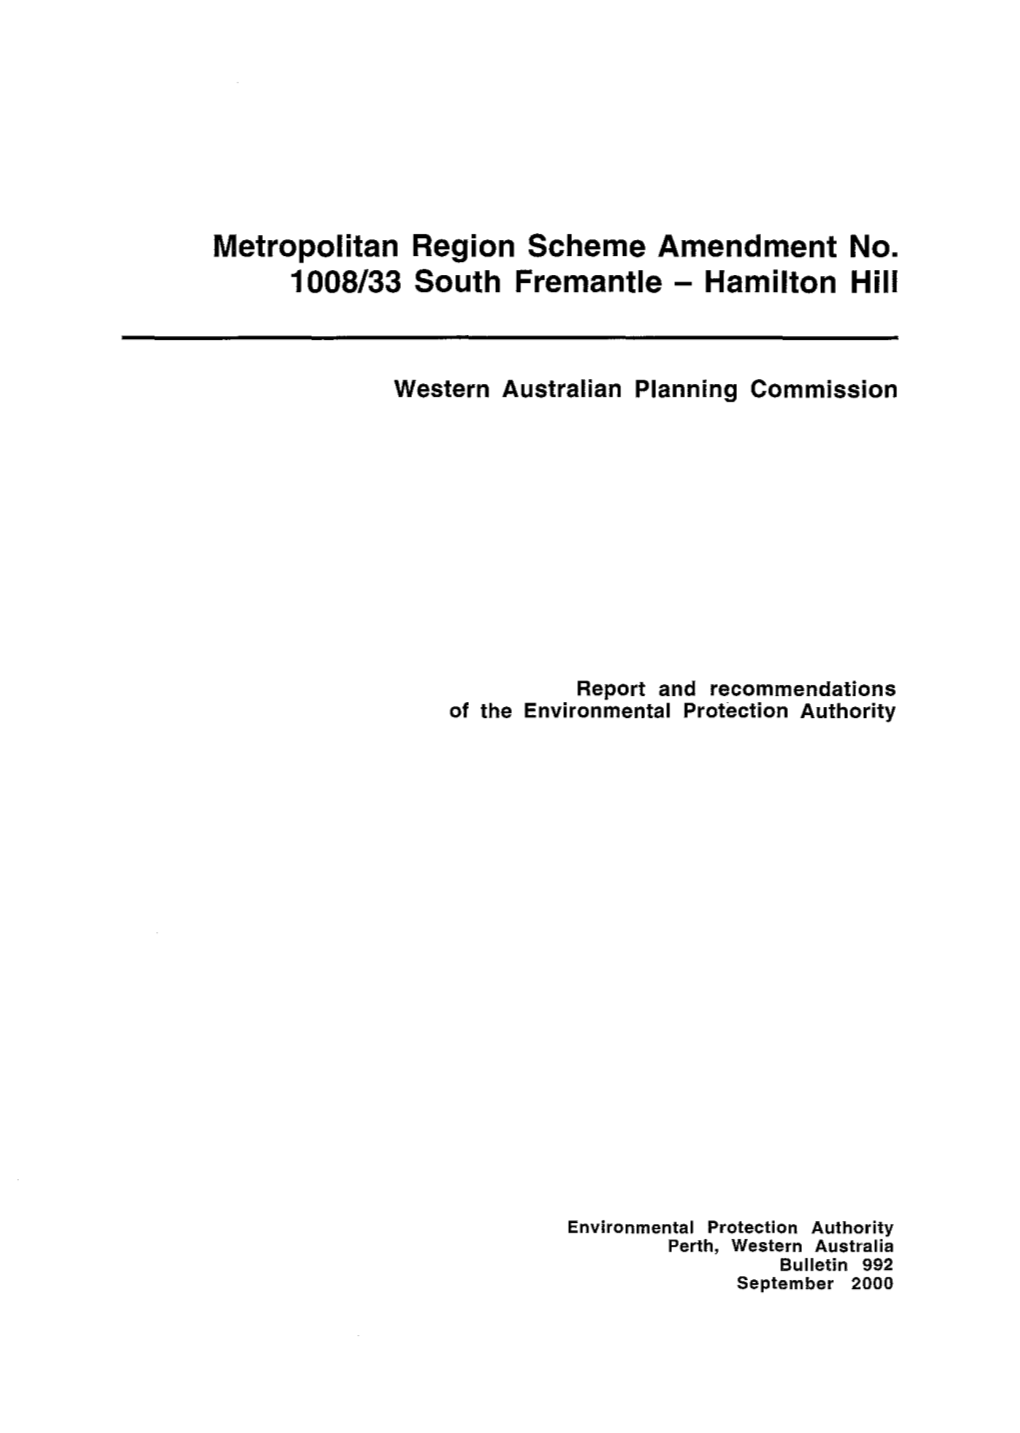 Metropolitan Region Scheme Amendment No. 1008/33 South Fremantle - Hamilton Hill